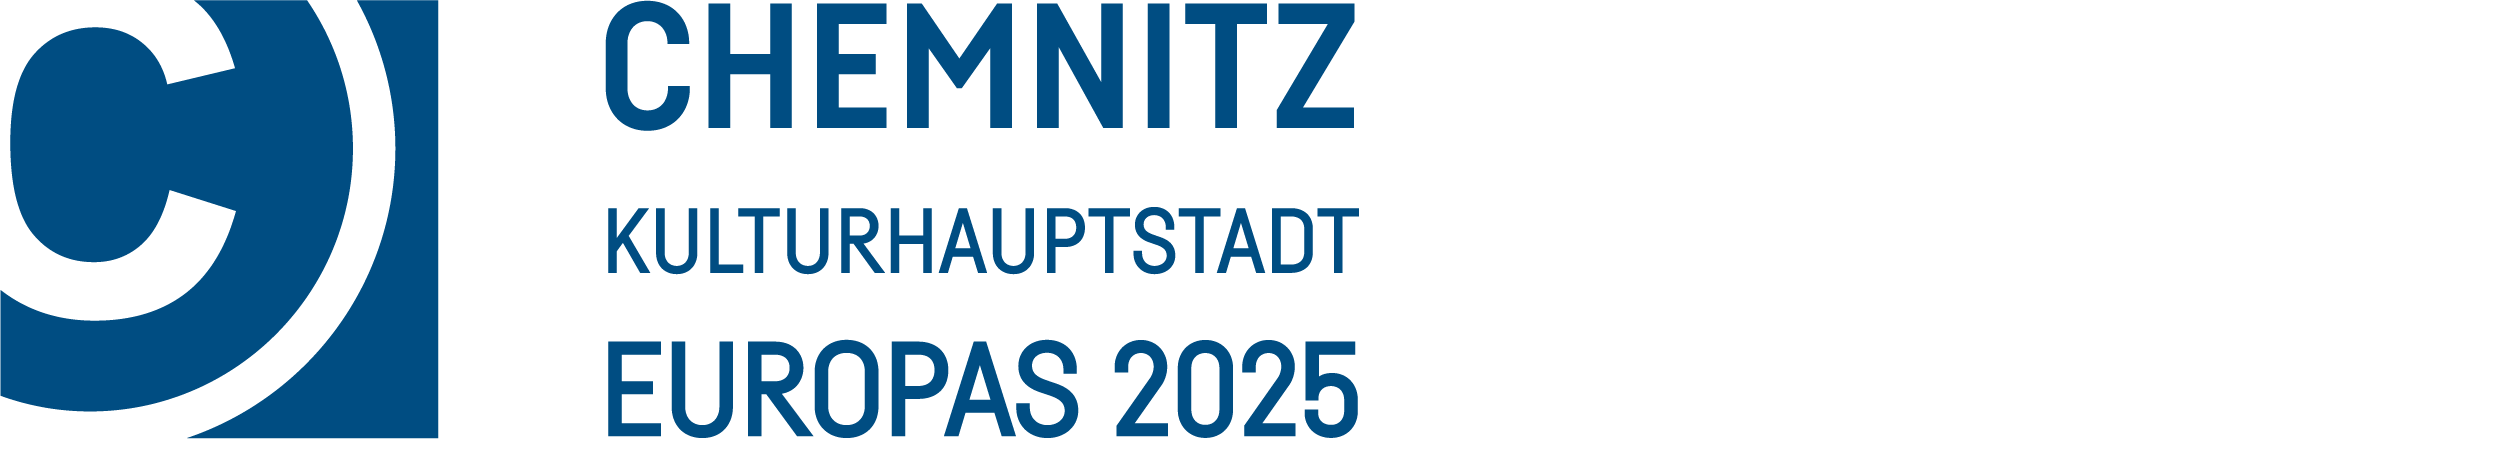 Chemnitz Kulturhauptstadt Europas 2025 Förderlogo